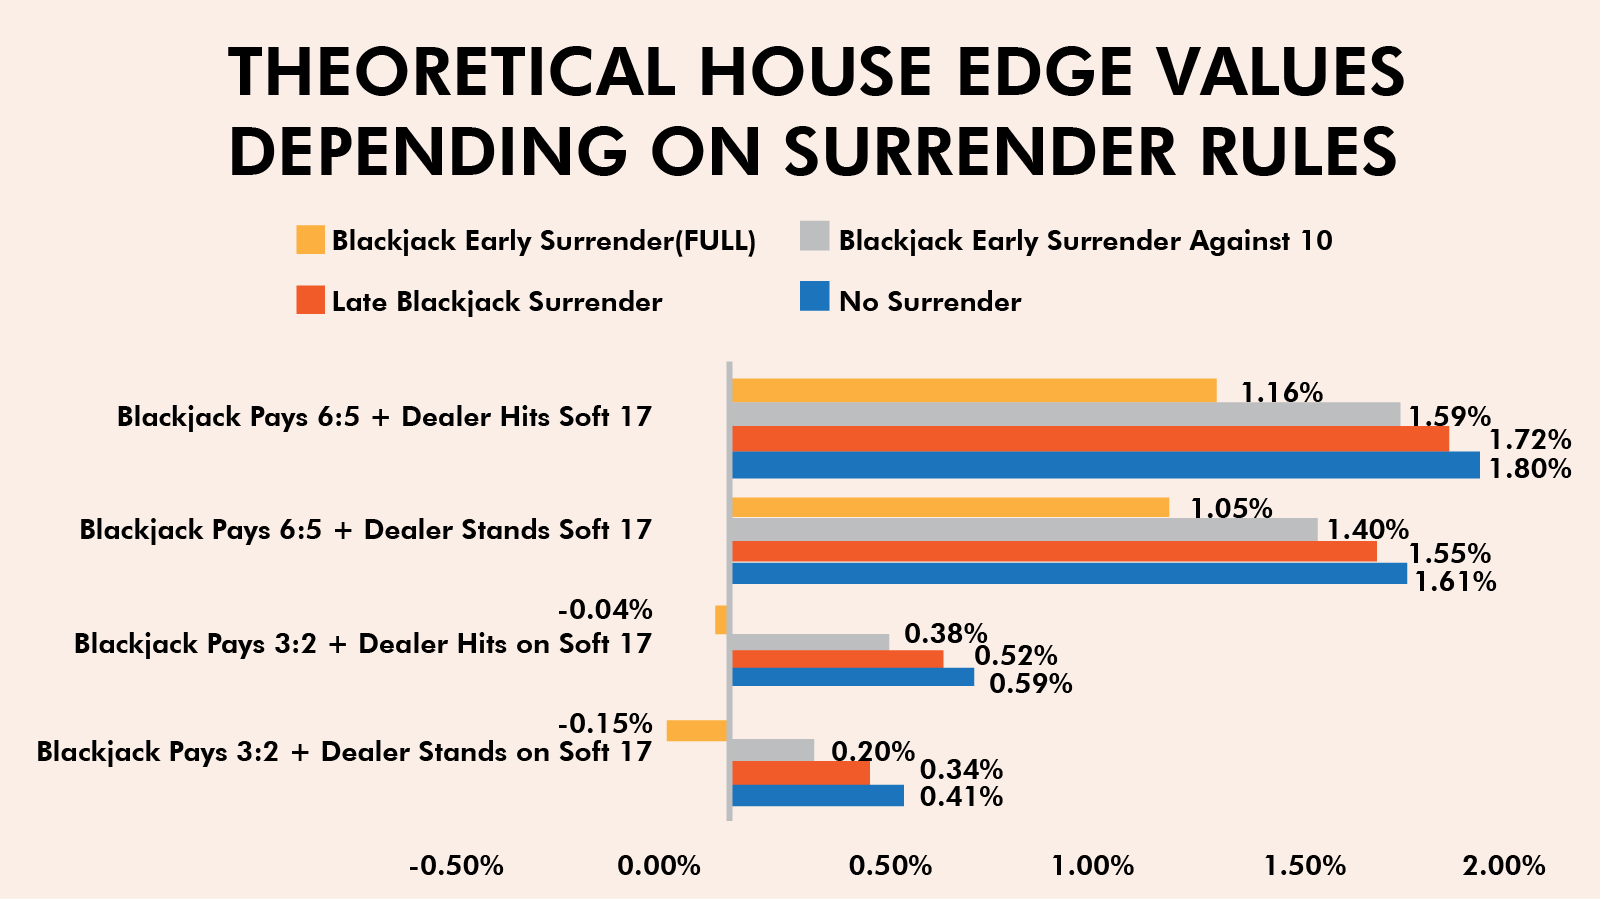 Blackjack Surrender Rules Affect the House Edge